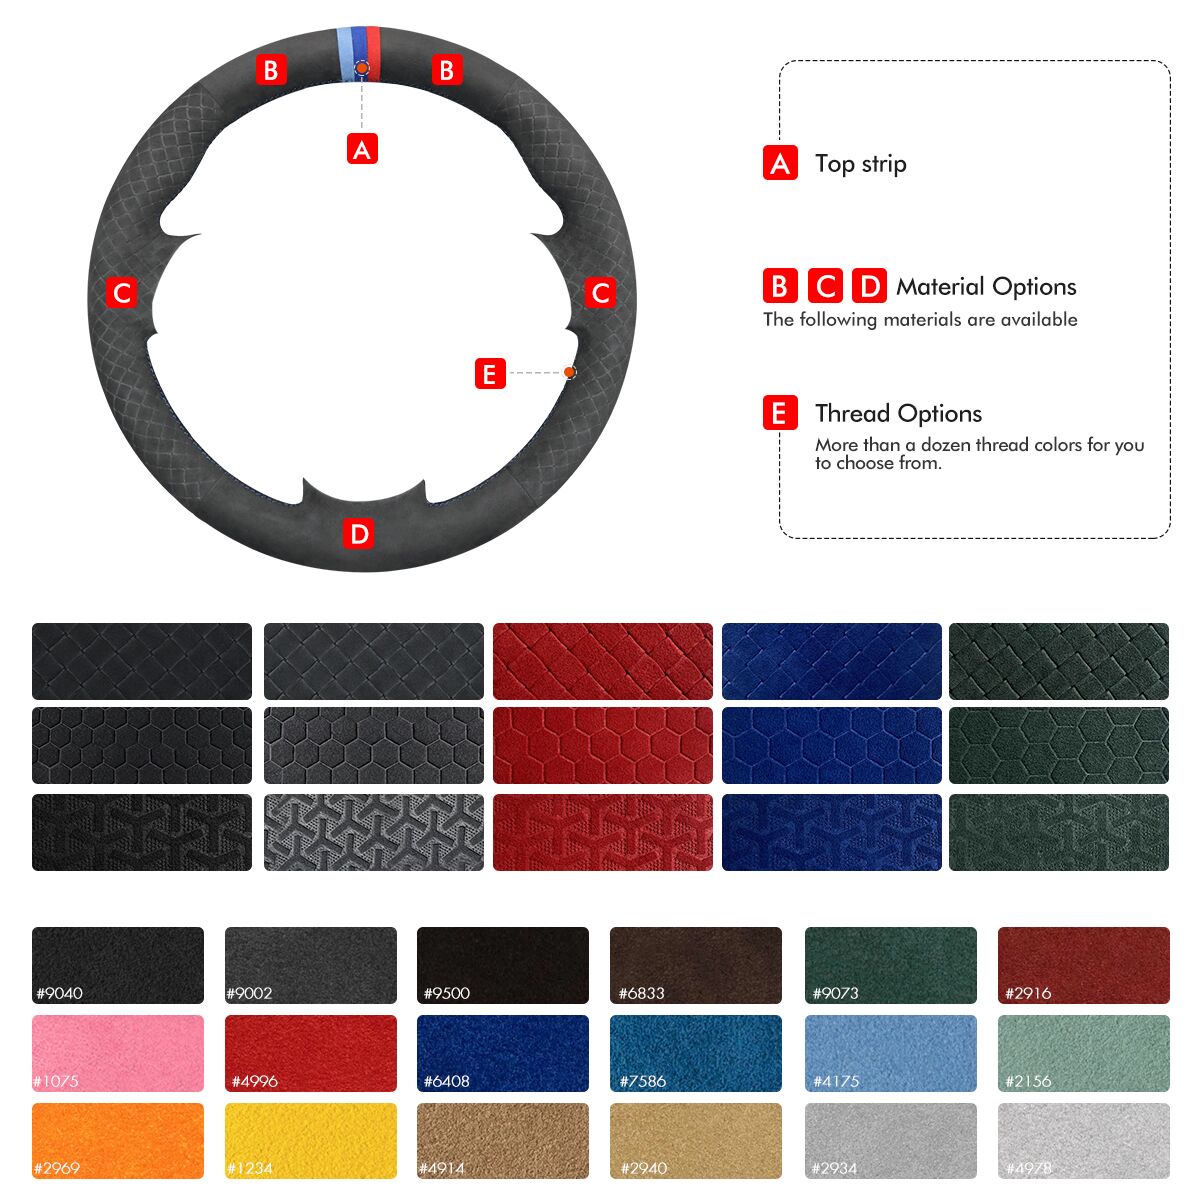 MEWANT Hand Stitch Car Steering Wheel Cover for Nissan Note / Tiida / Bluebird Sylphy / Versa / Versa Note